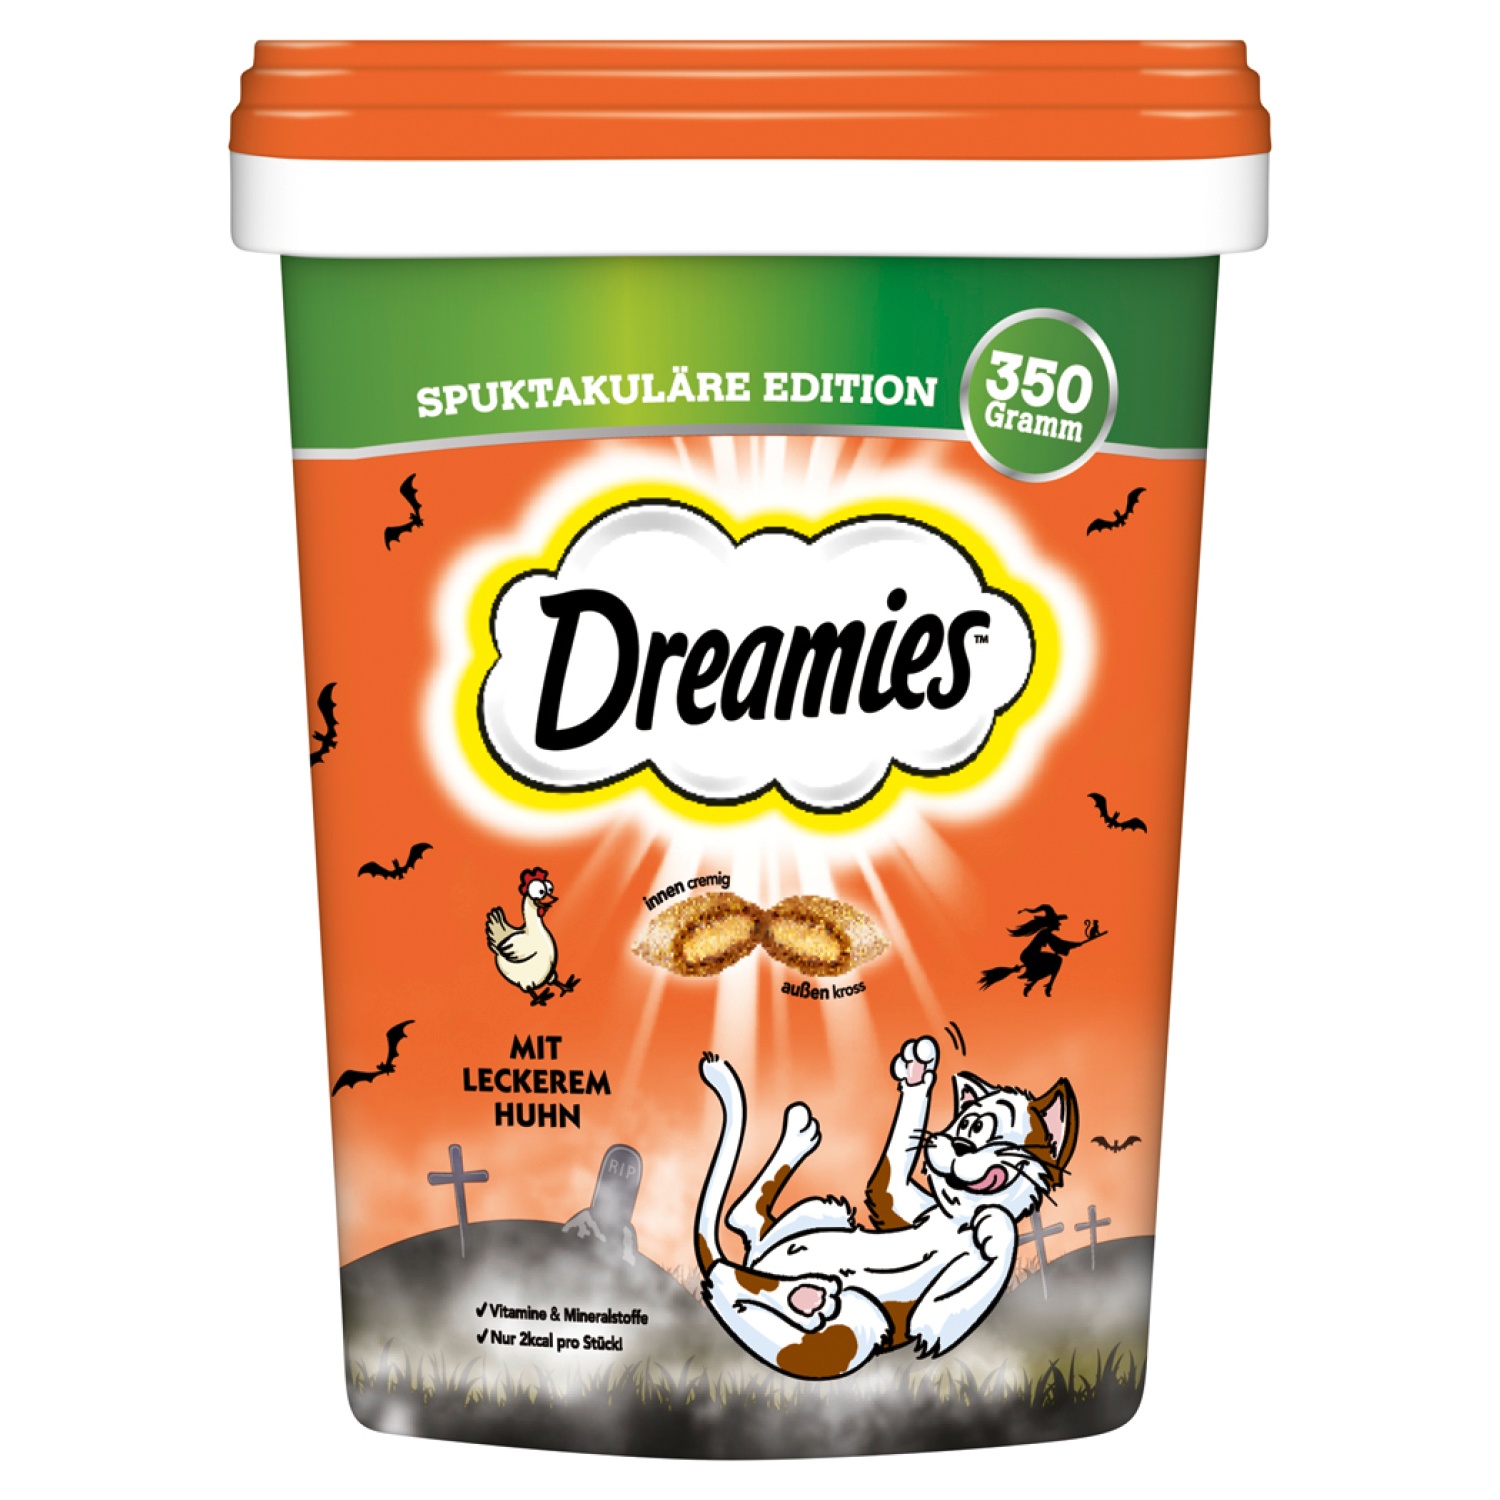 Dreamies™ Spuktakuläre Halloween-Edition 350g